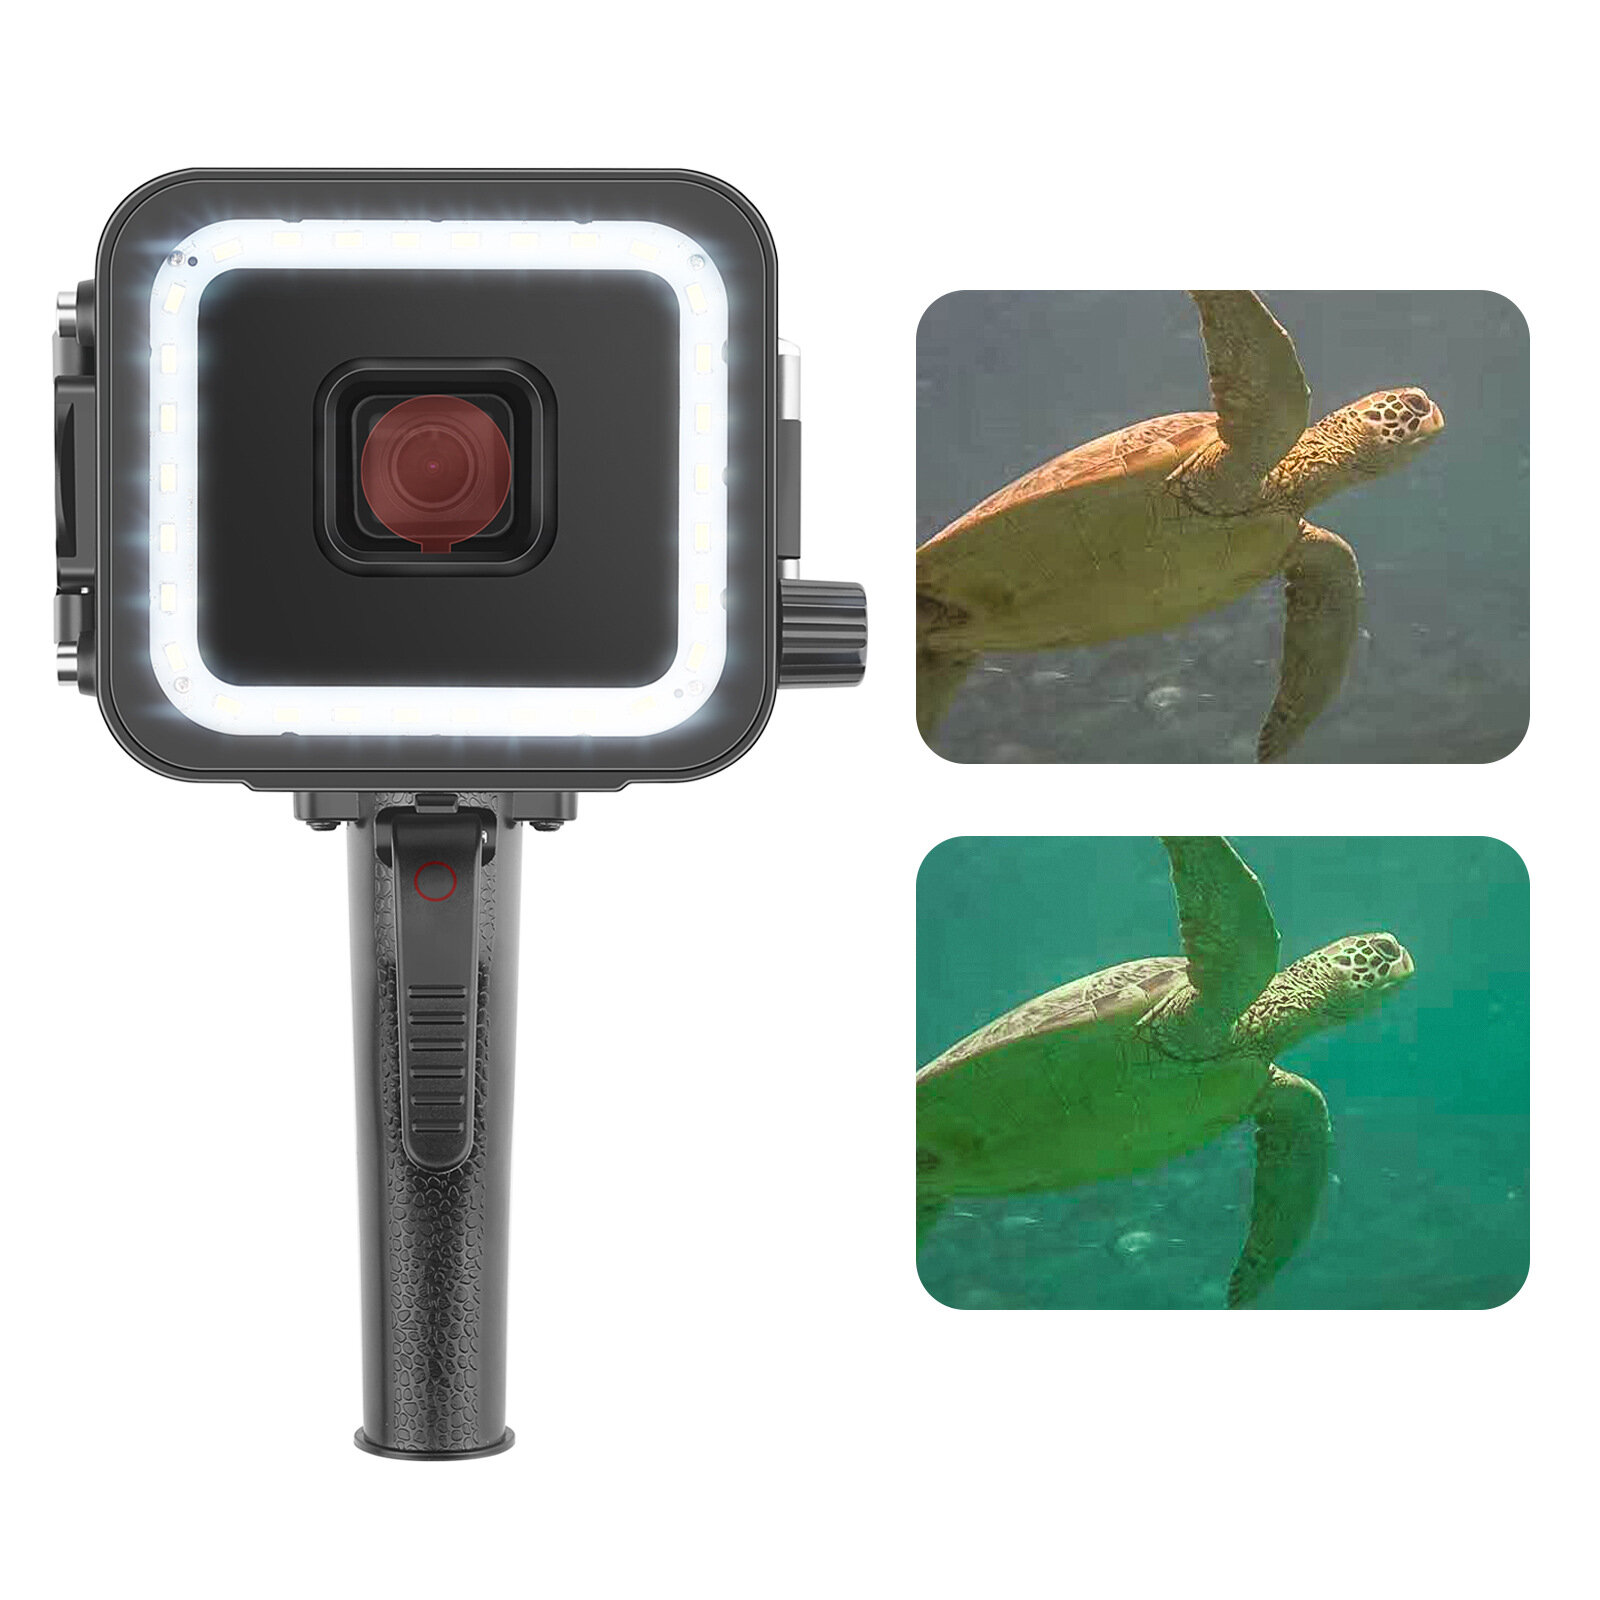 

SHOOT 40M LED Underwater Lamp Diving Light for GoPro Hero 7 6 5 Black Video Flash Fill Lights Waterproof Case Red Filter